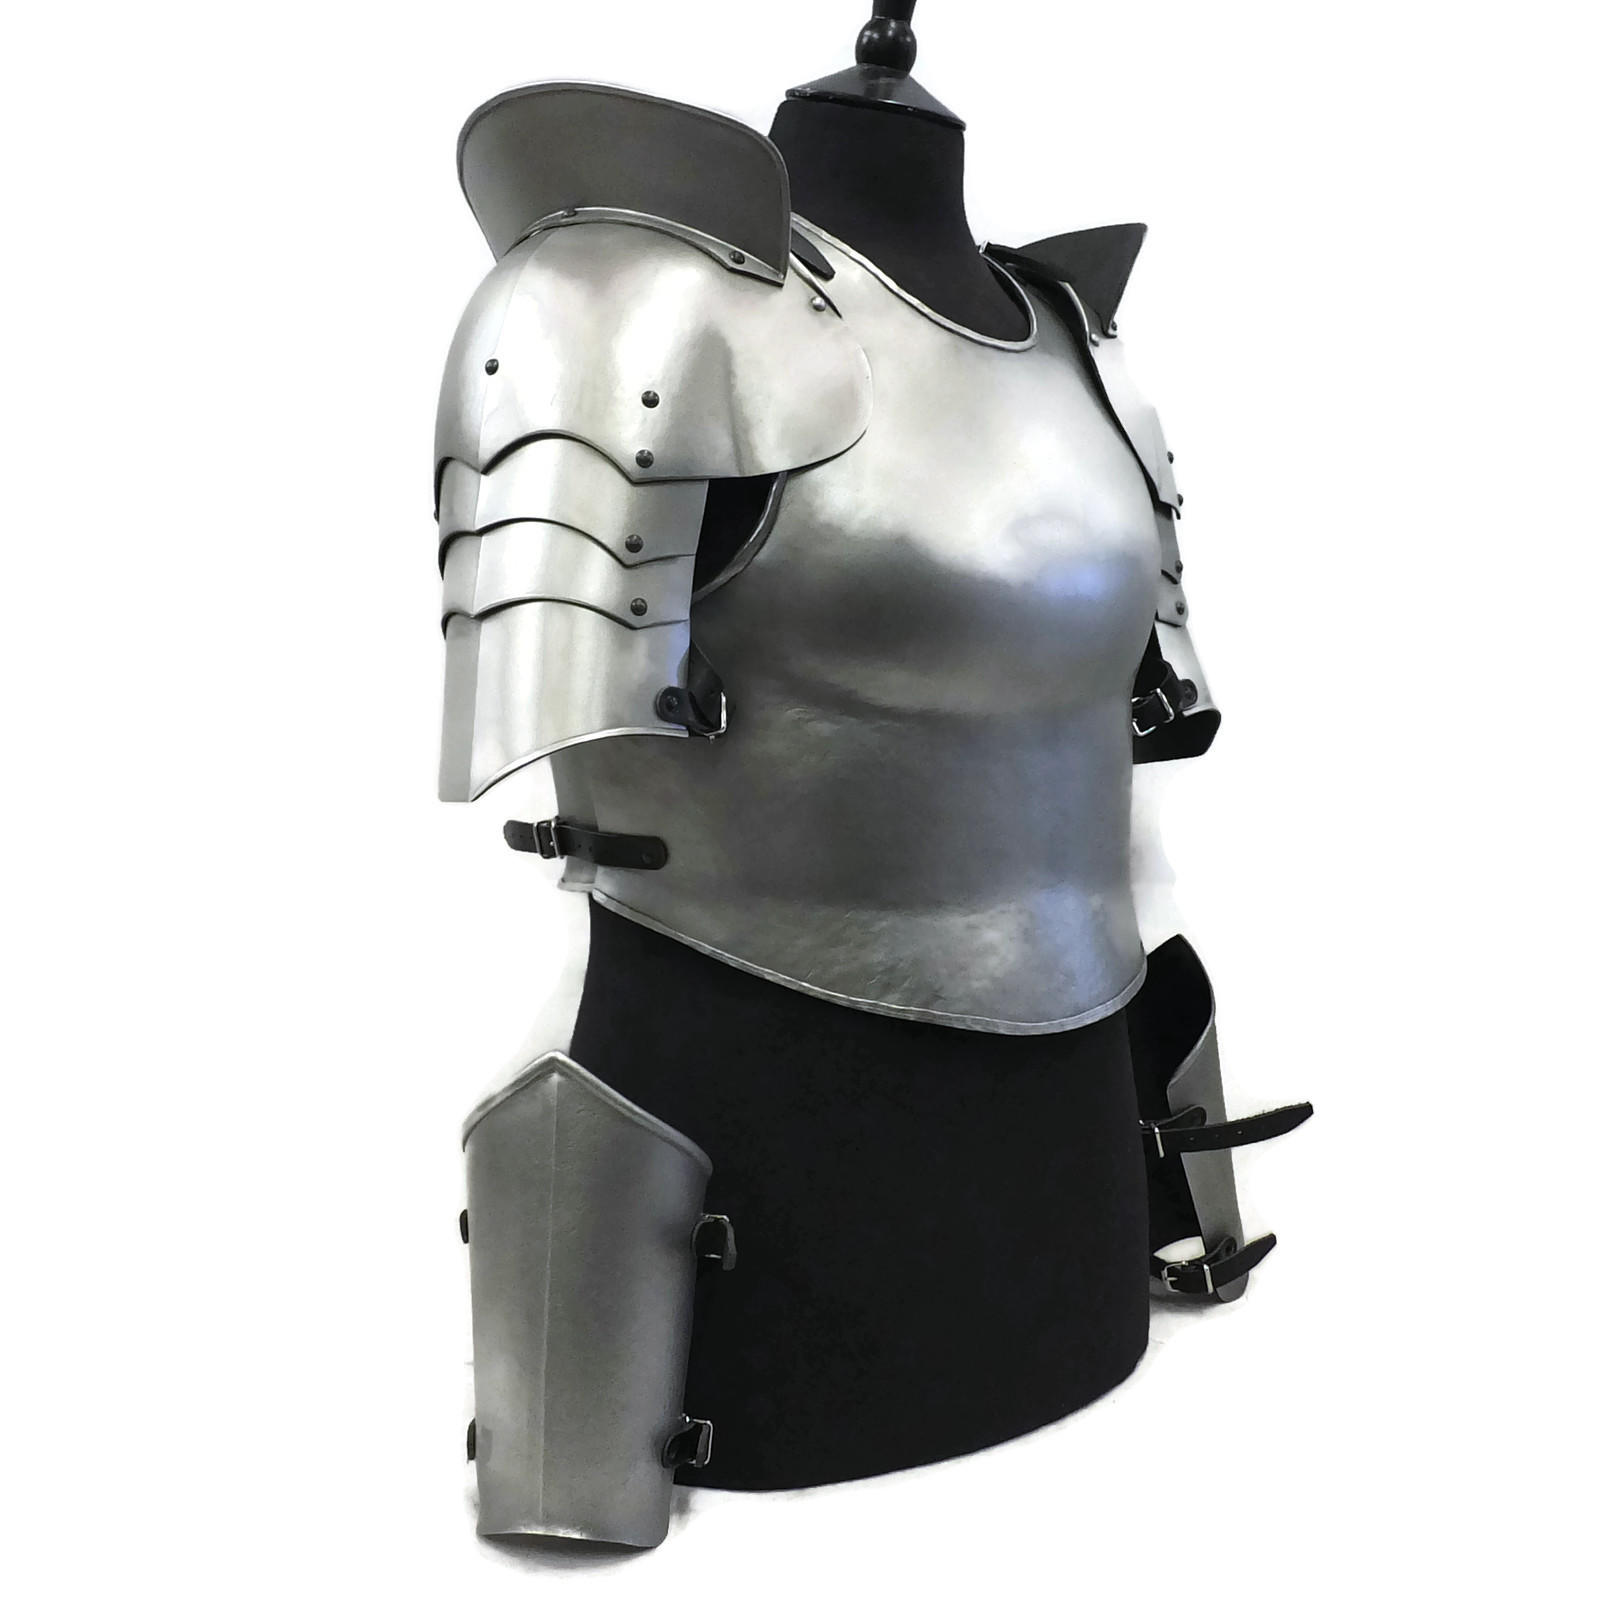 Female Medieval Upper Body Armour Set